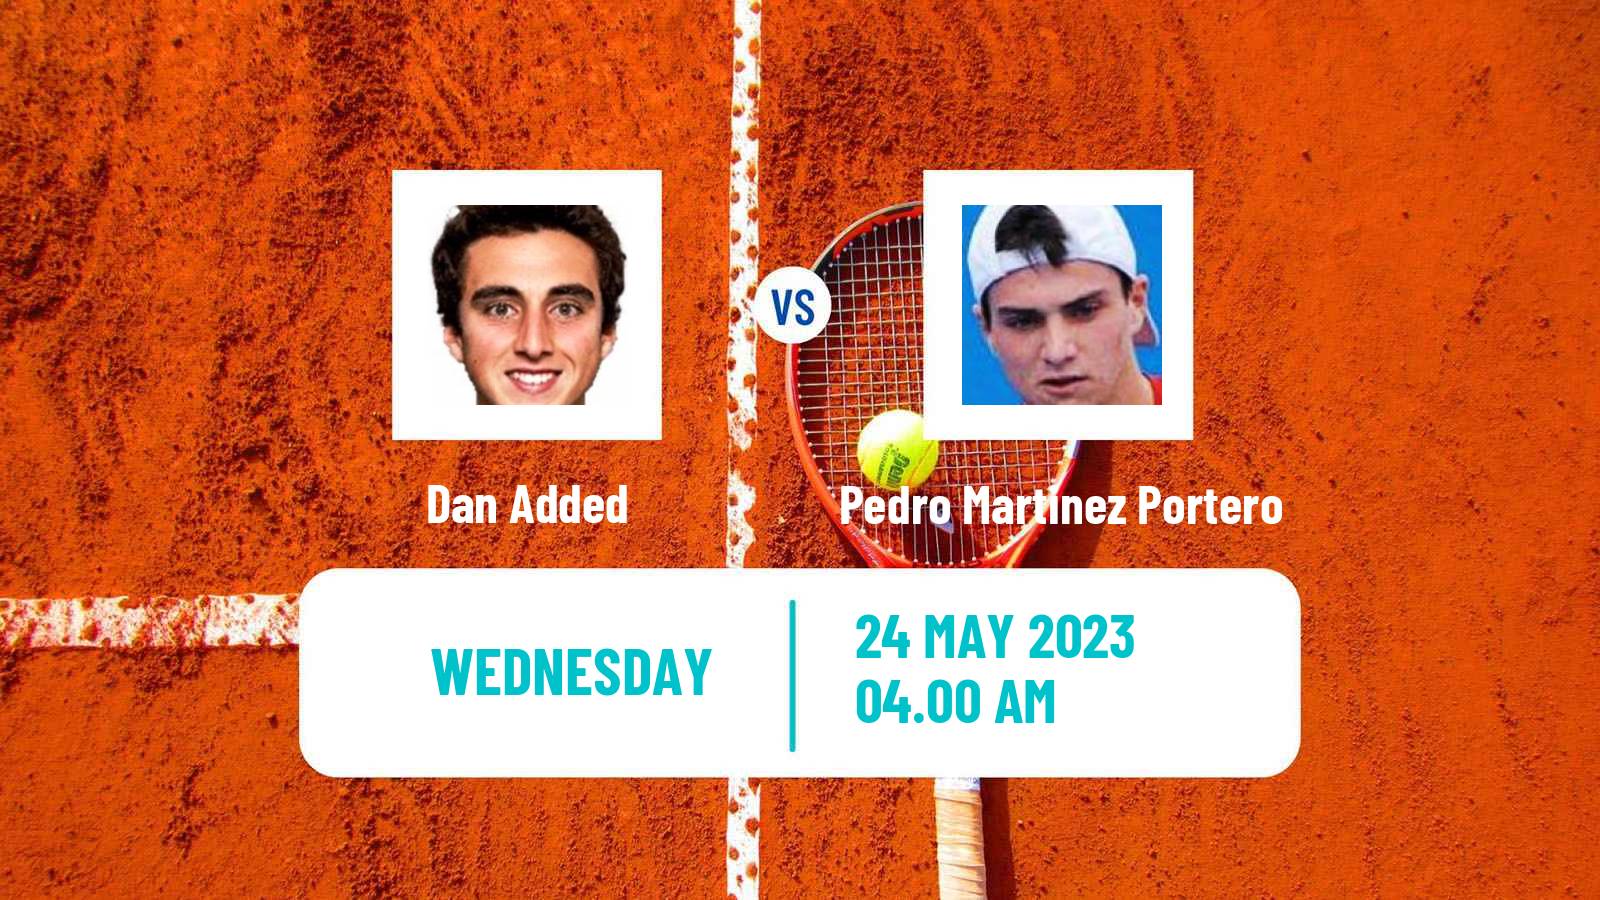 Tennis ATP Roland Garros Dan Added - Pedro Martinez Portero